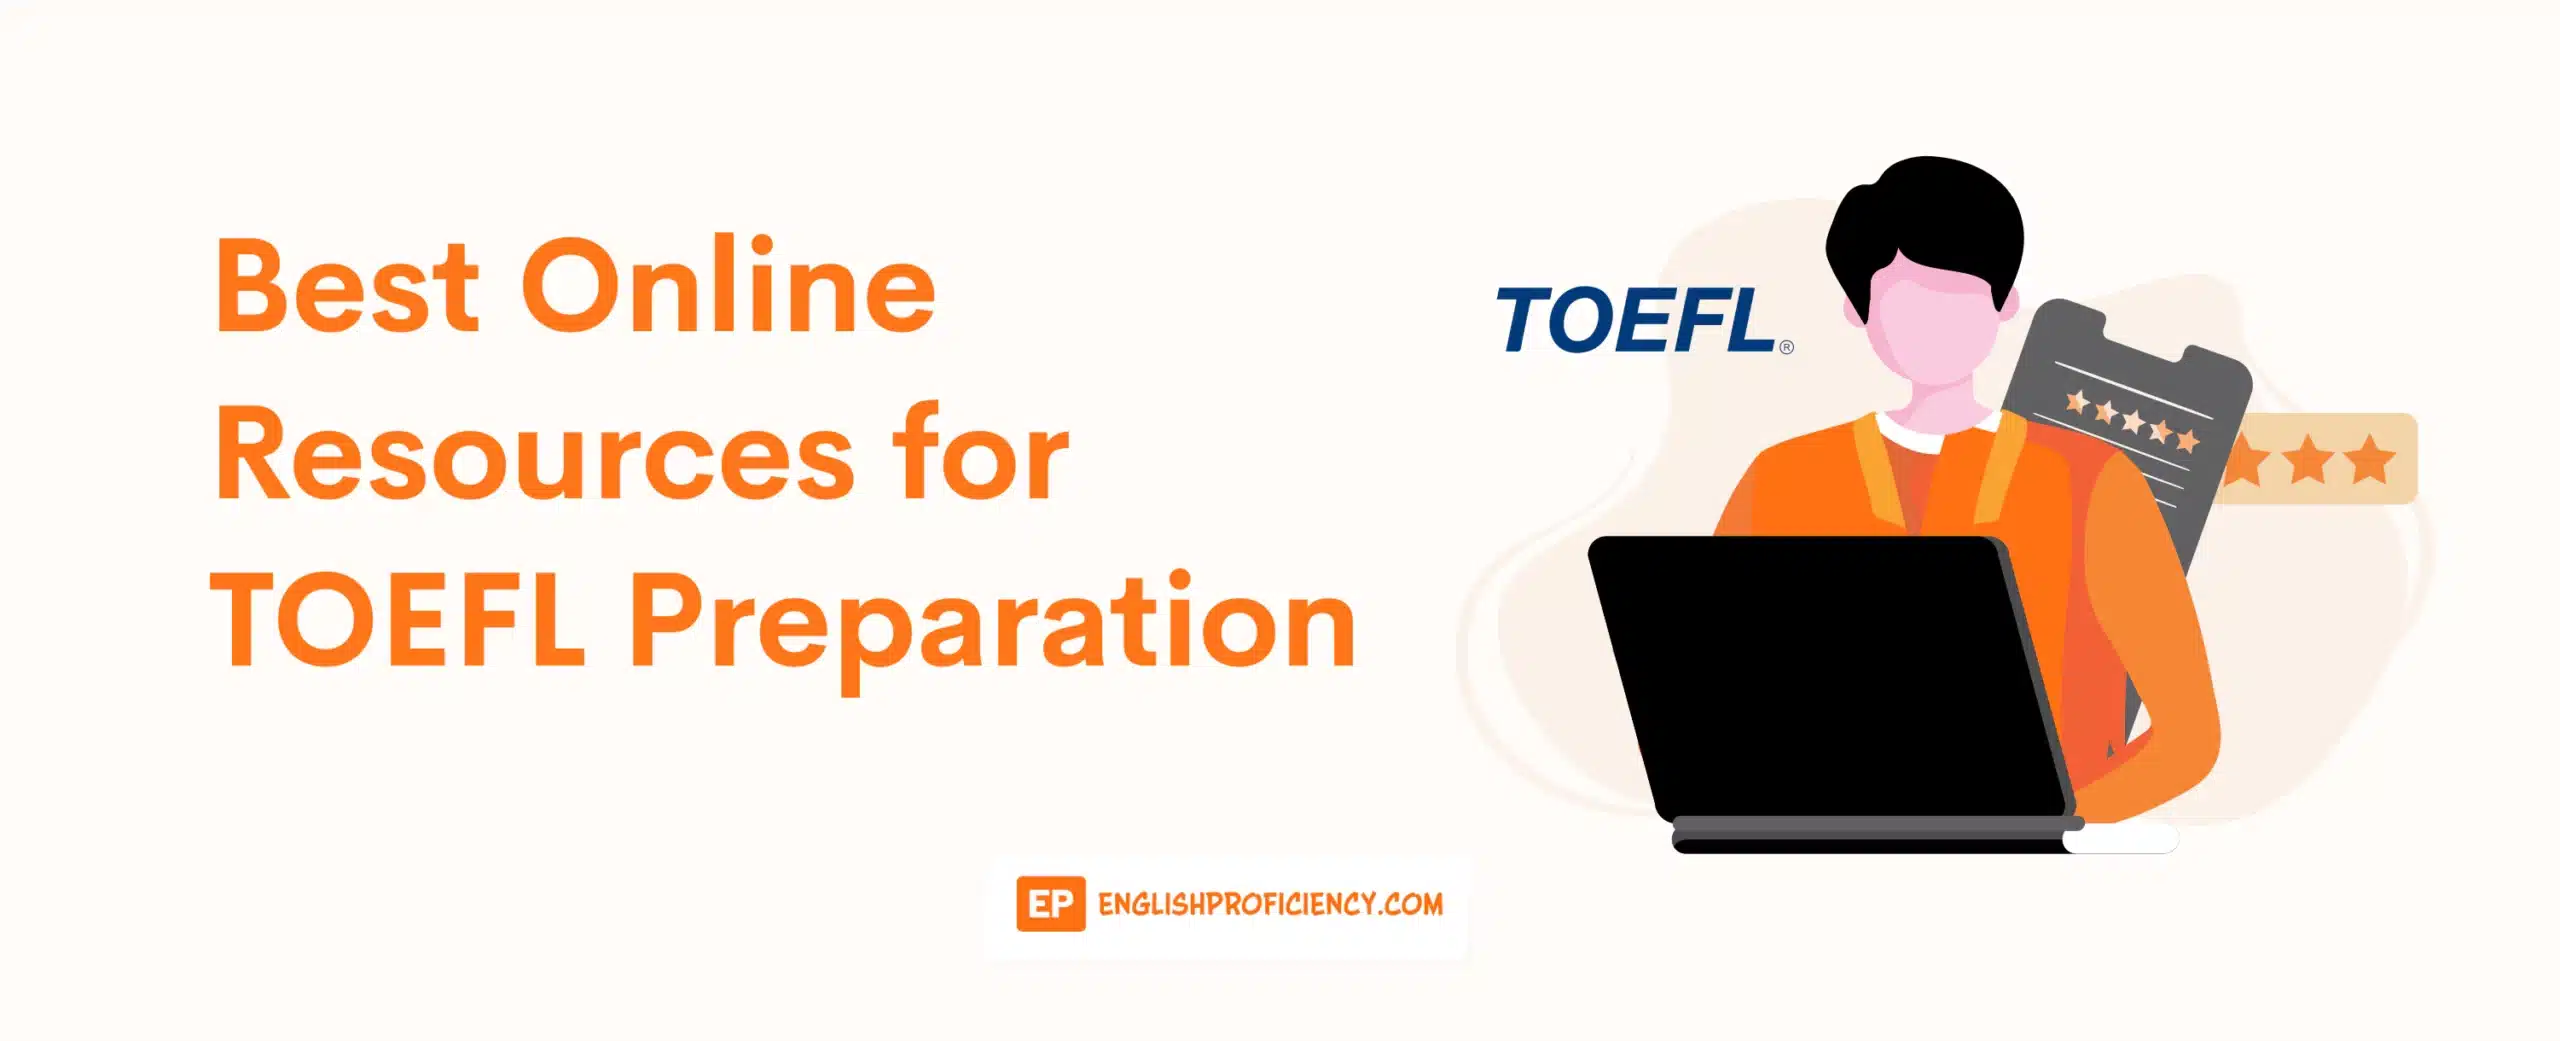 Best Online Resources for TOEFL Preparation